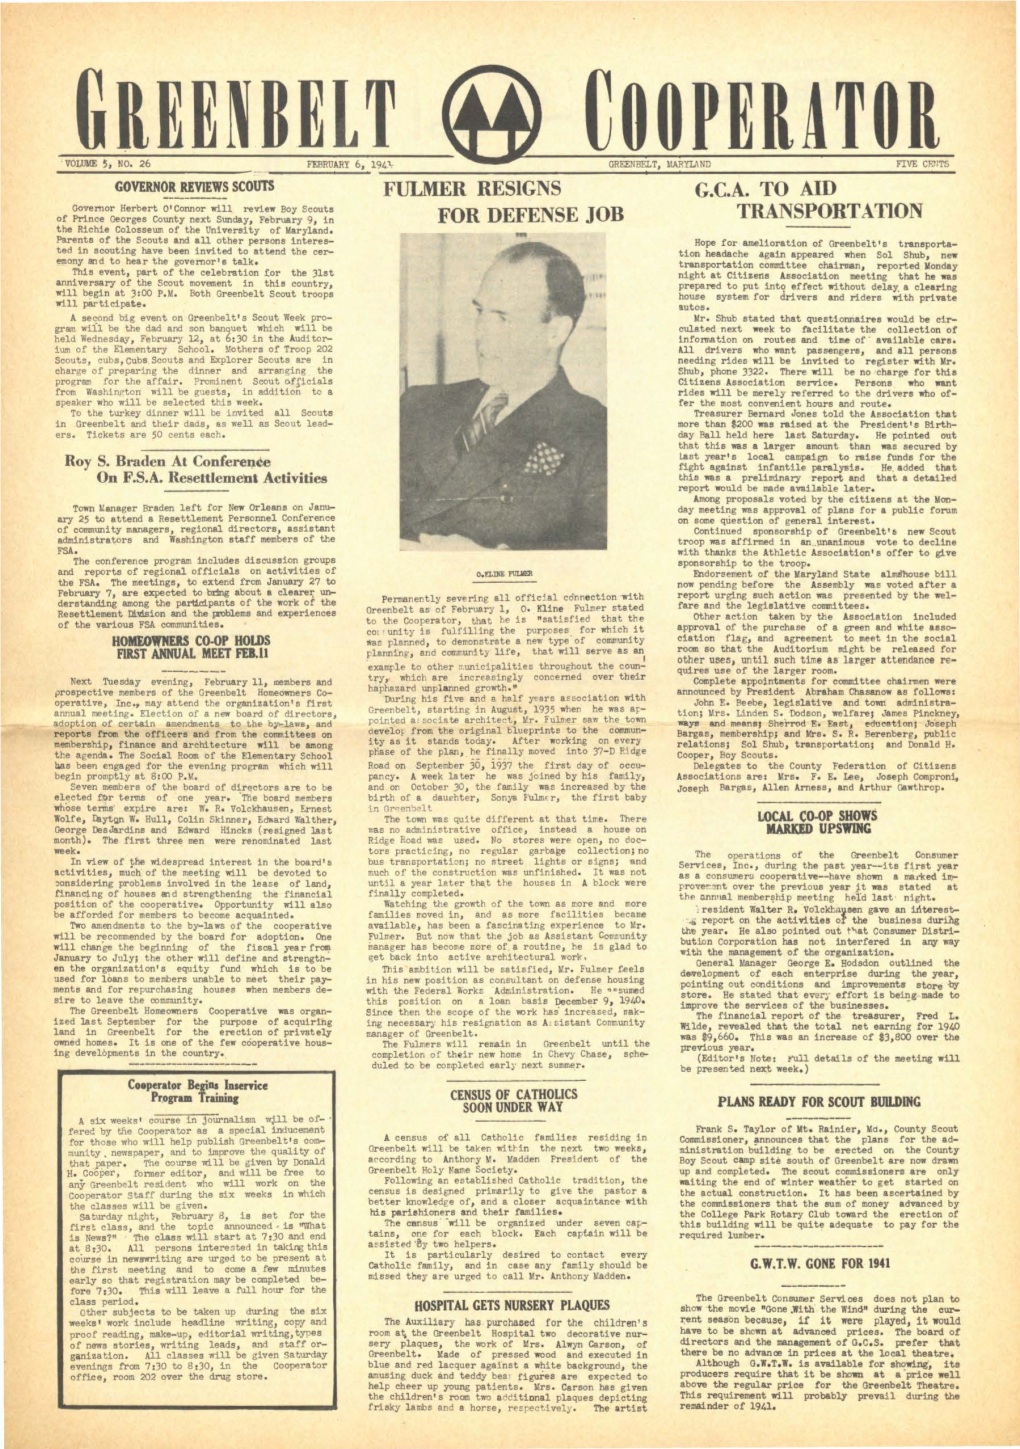 2 February 1941 Greenbelt News Review